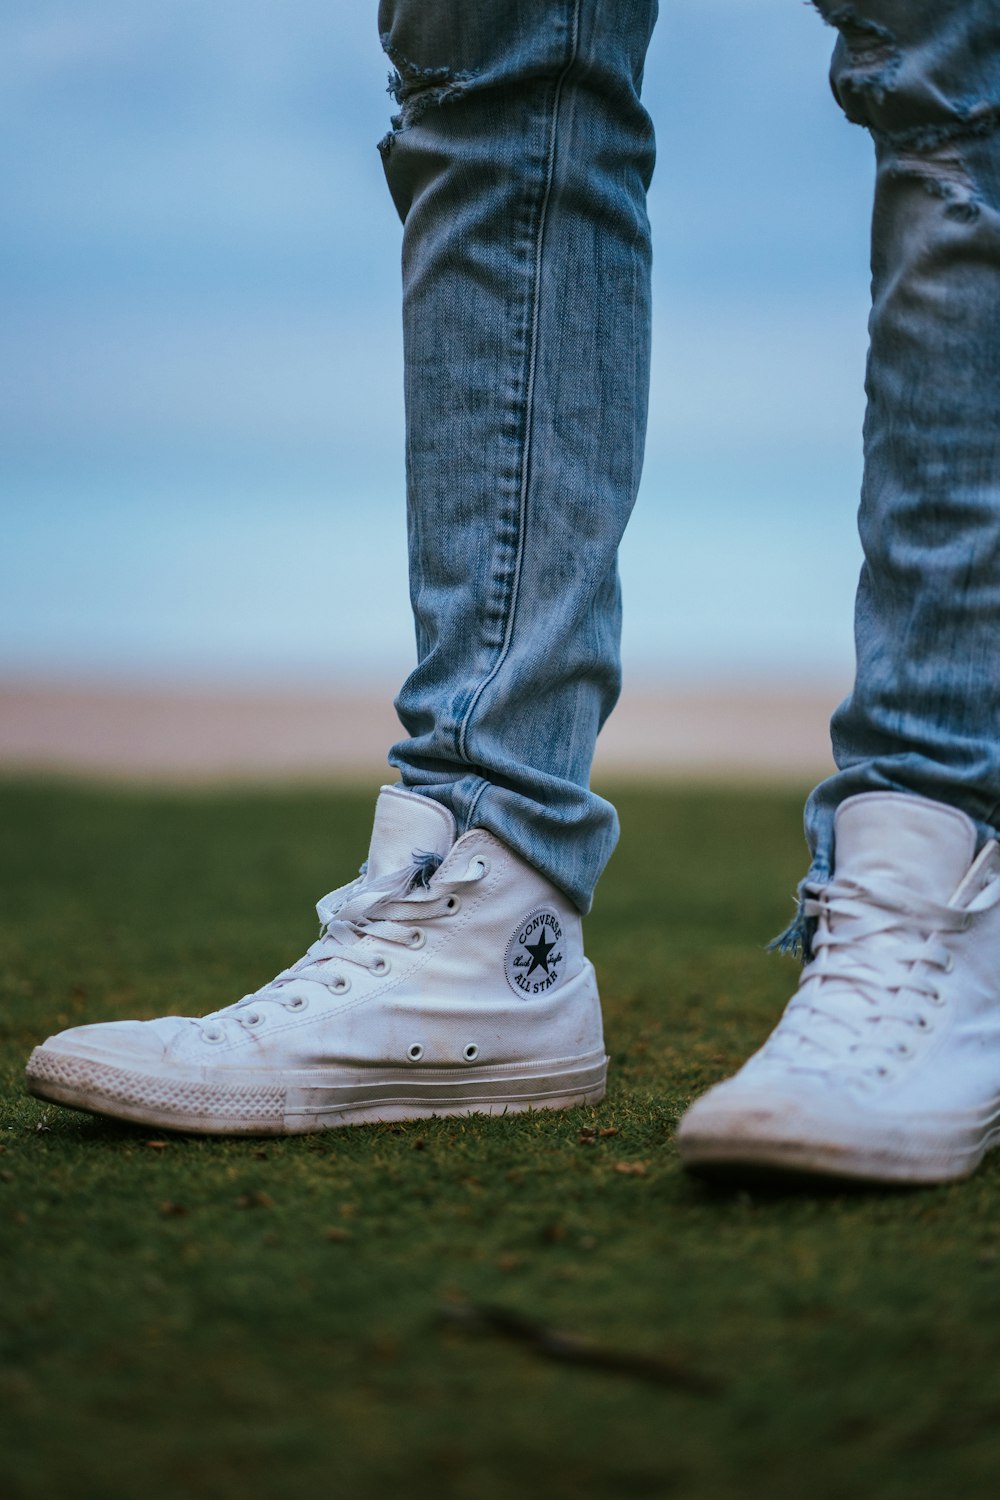 Man wearing Converse high-tops shoes Free Florida Image on Unsplash